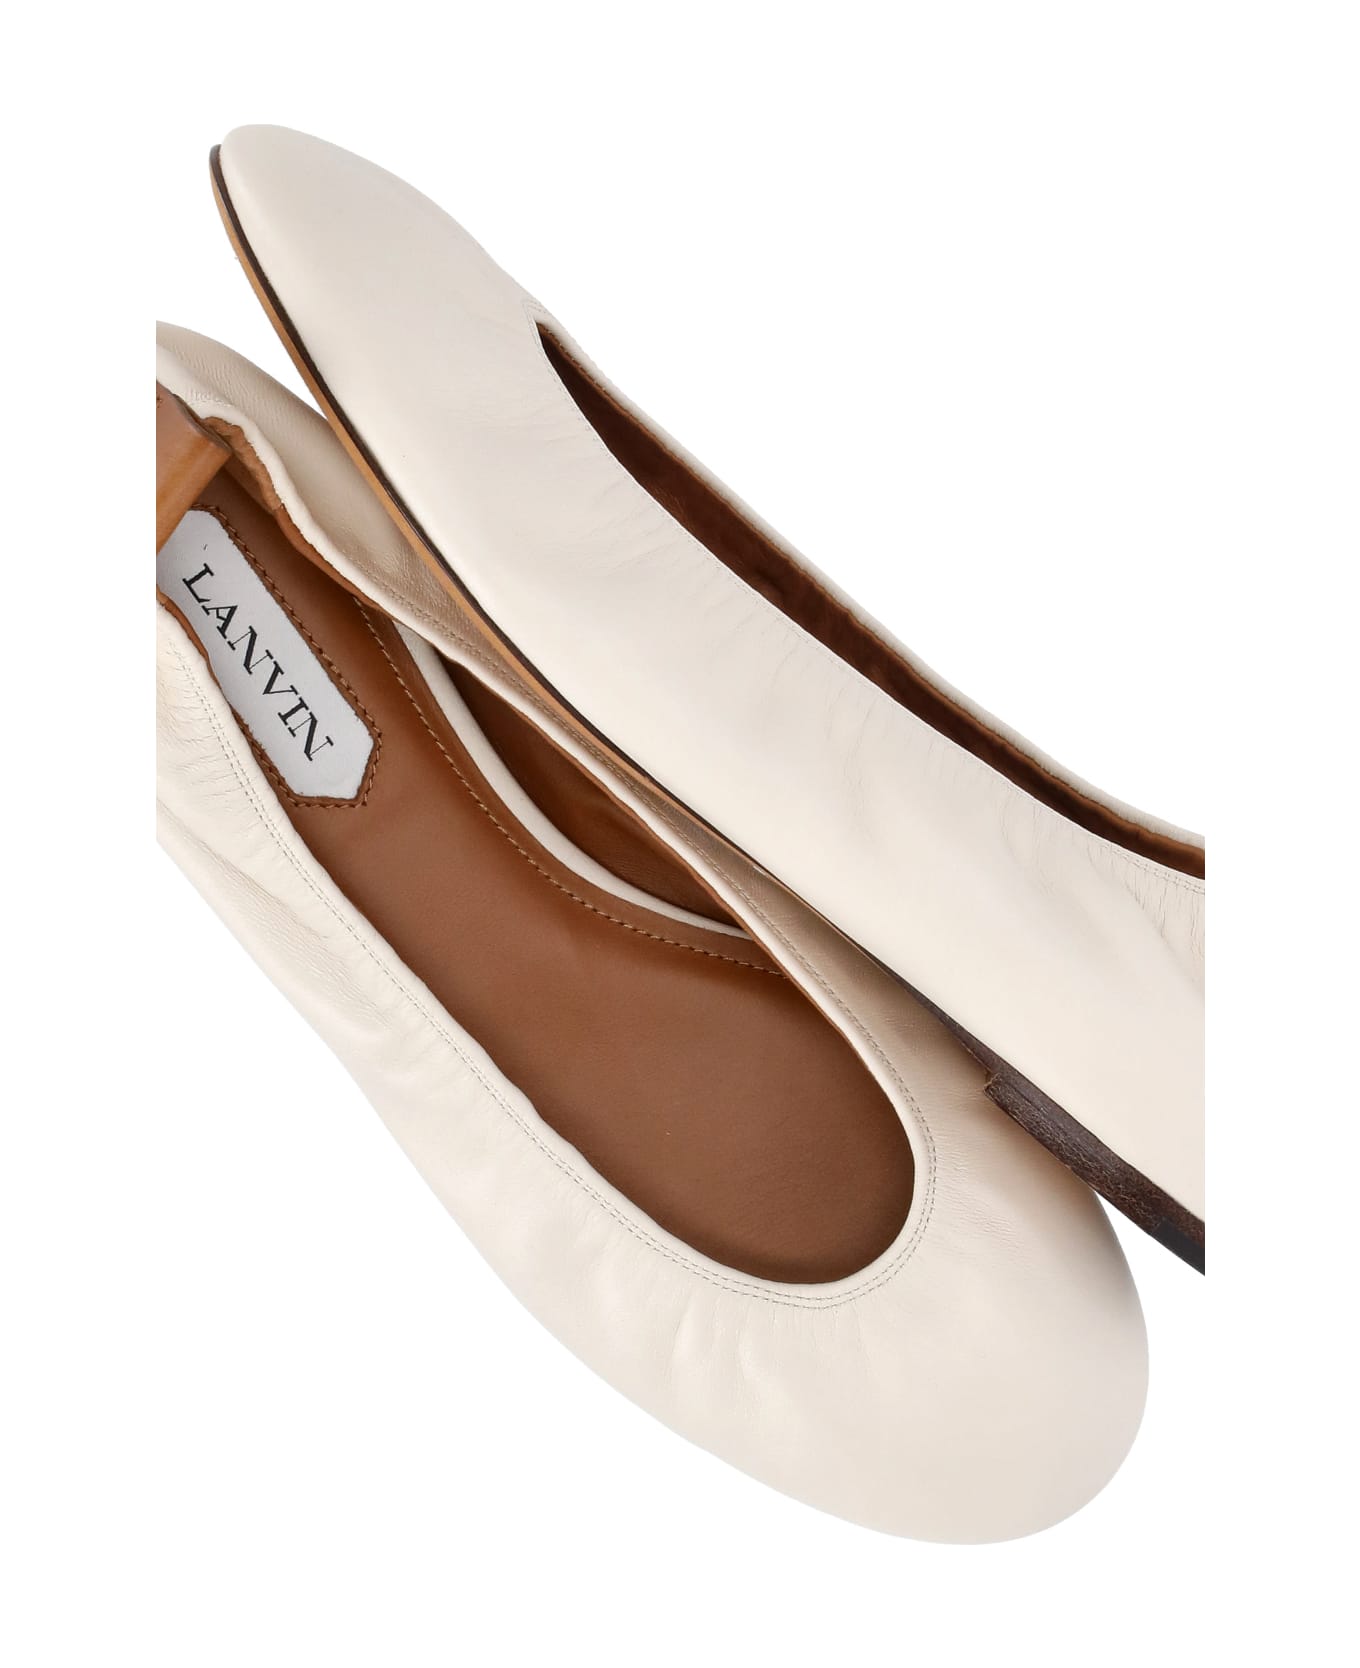 Lanvin Leather Ballet Shoes - Beige フラットシューズ